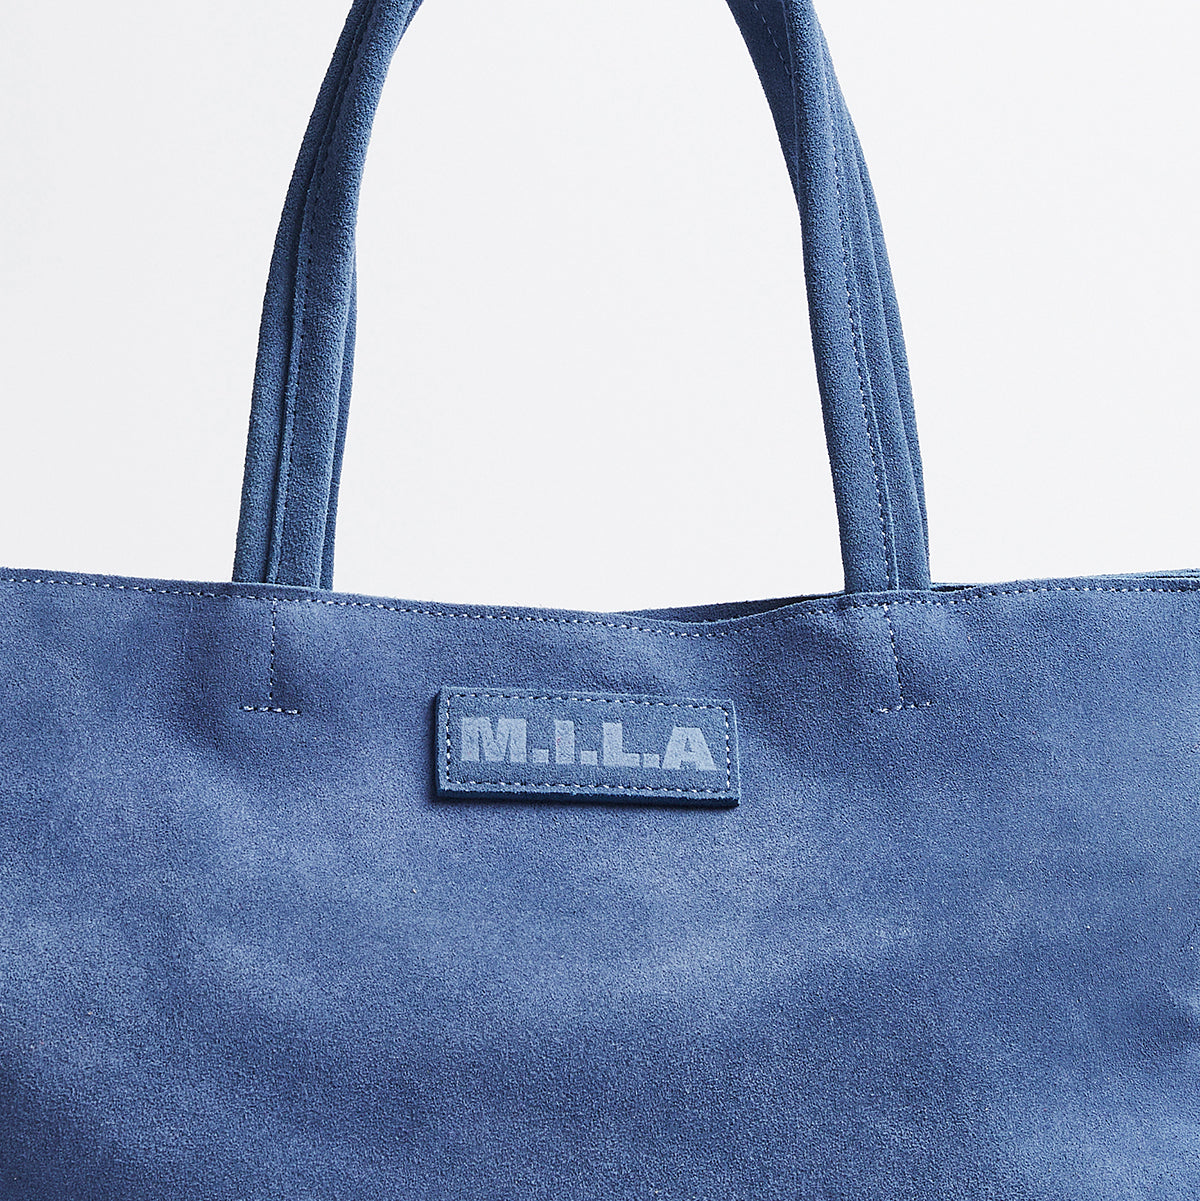 Luxury Tote Bag | Suede | Blue